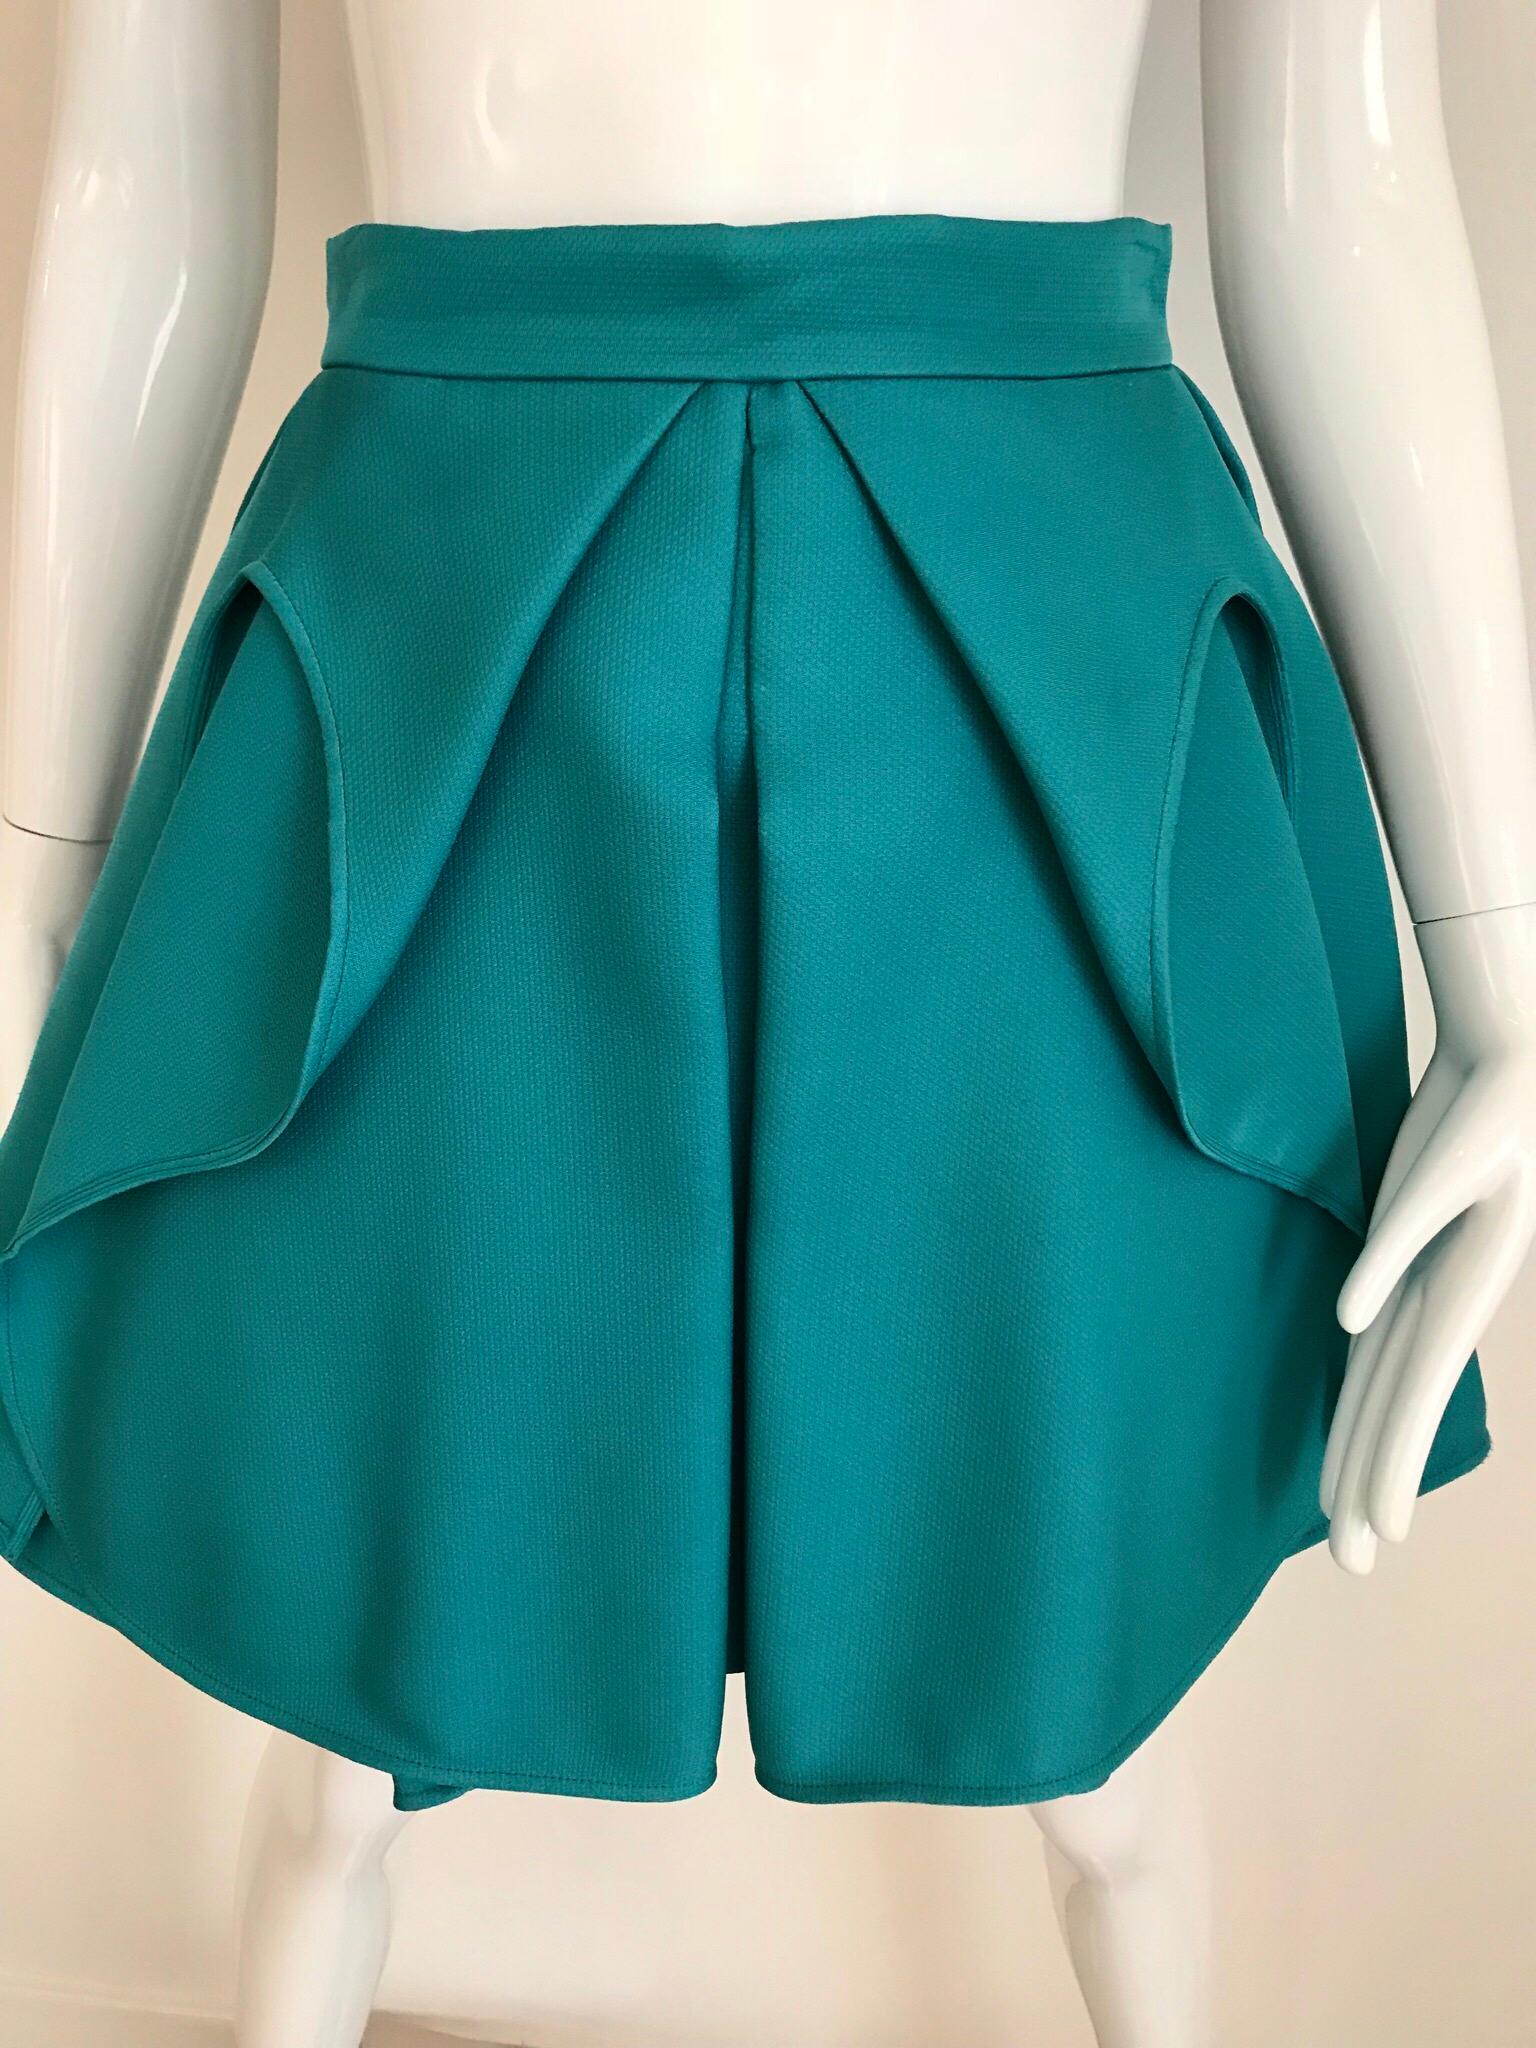 Antonia Bernardino Teal Pleated mini Skirt. Fitted on the waist and flare.
Waist: 26 inches